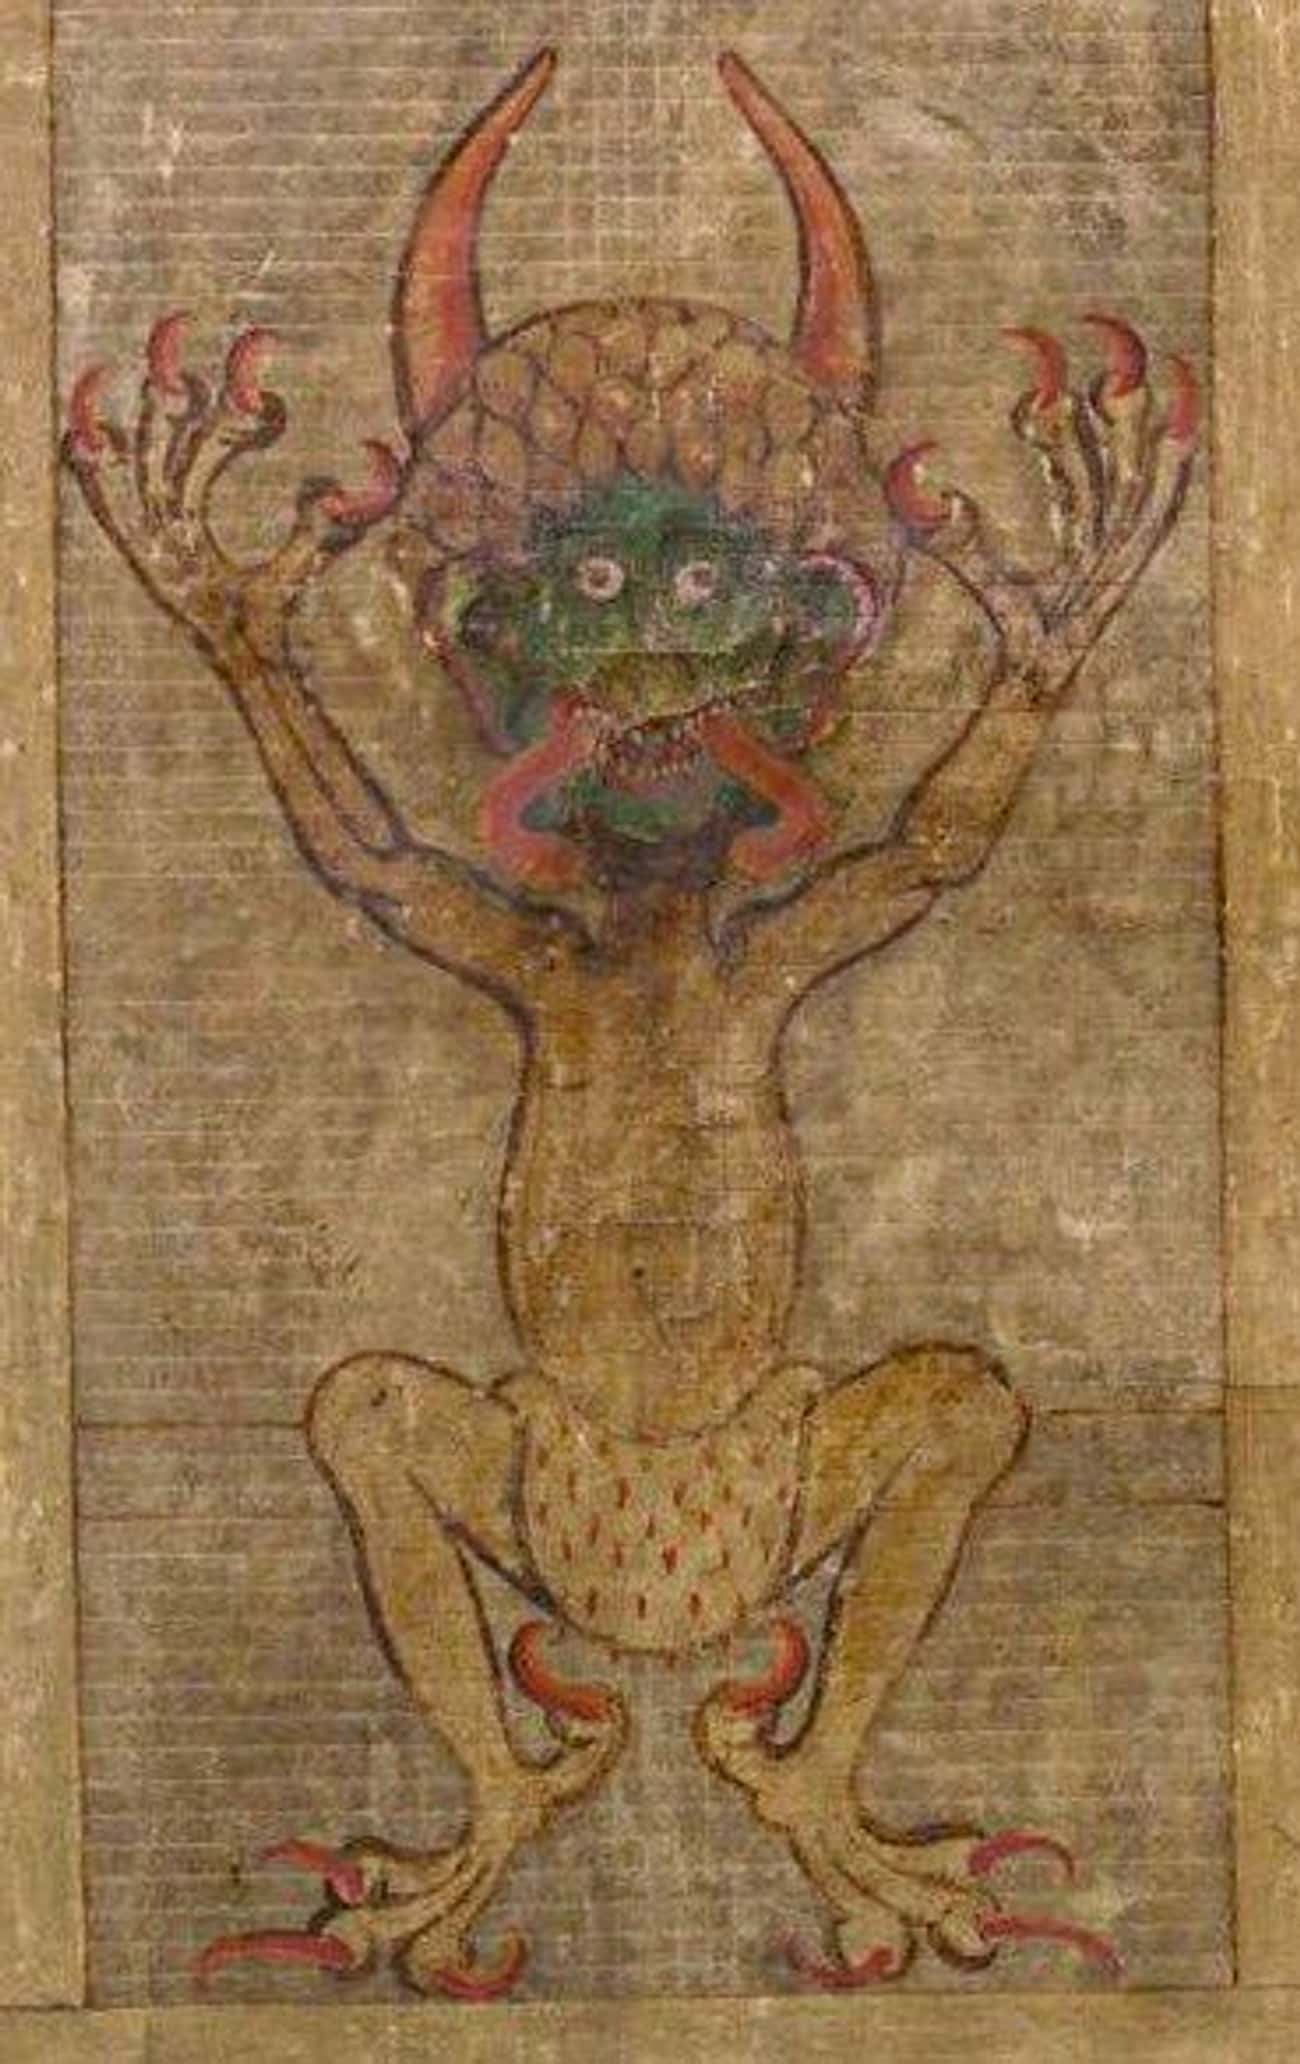 Codex Gigas (The Devil's Bible) 